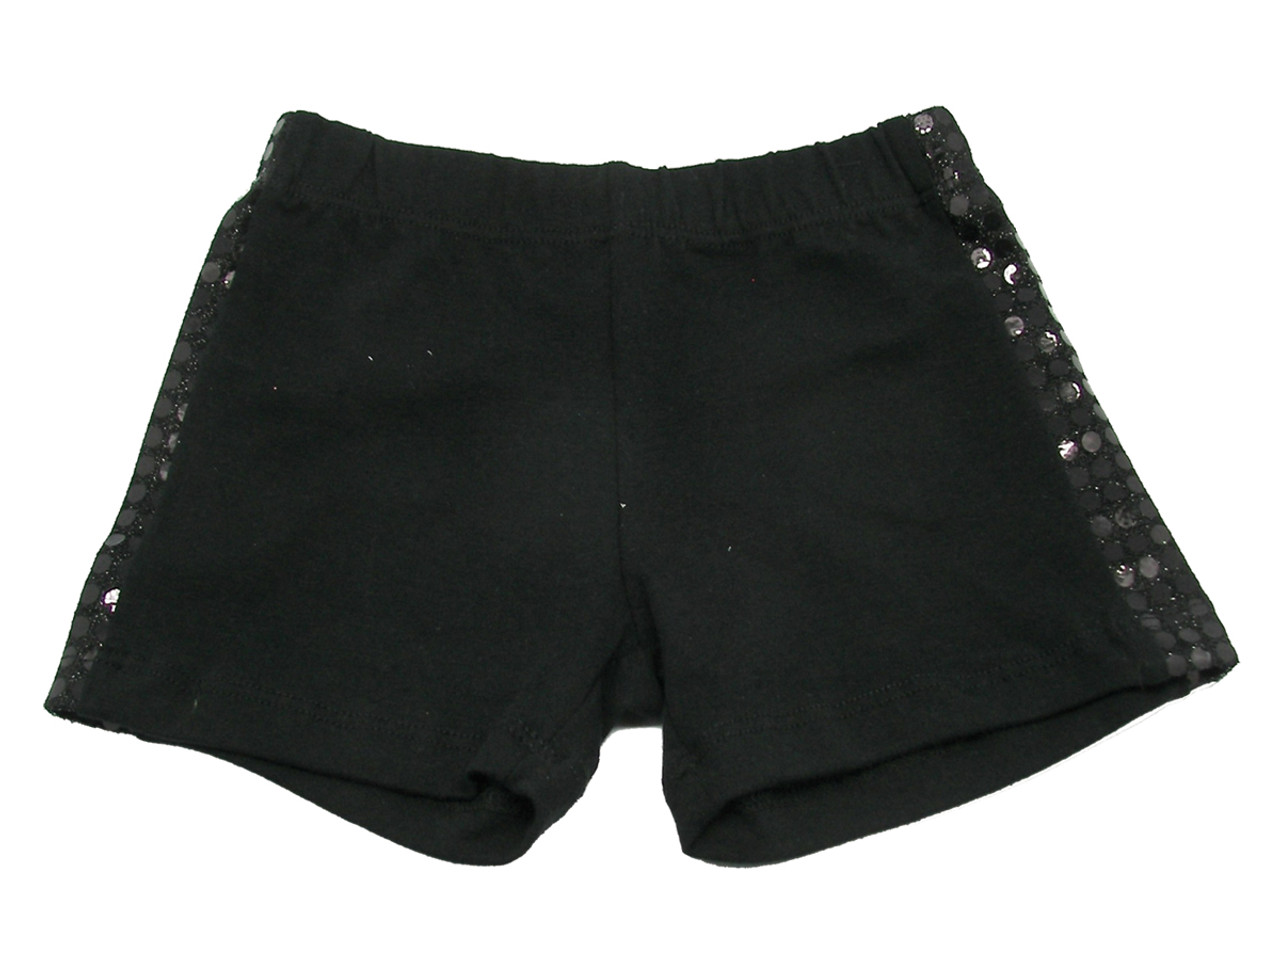 Shorts with Sequins - Black/sequins - Ladies